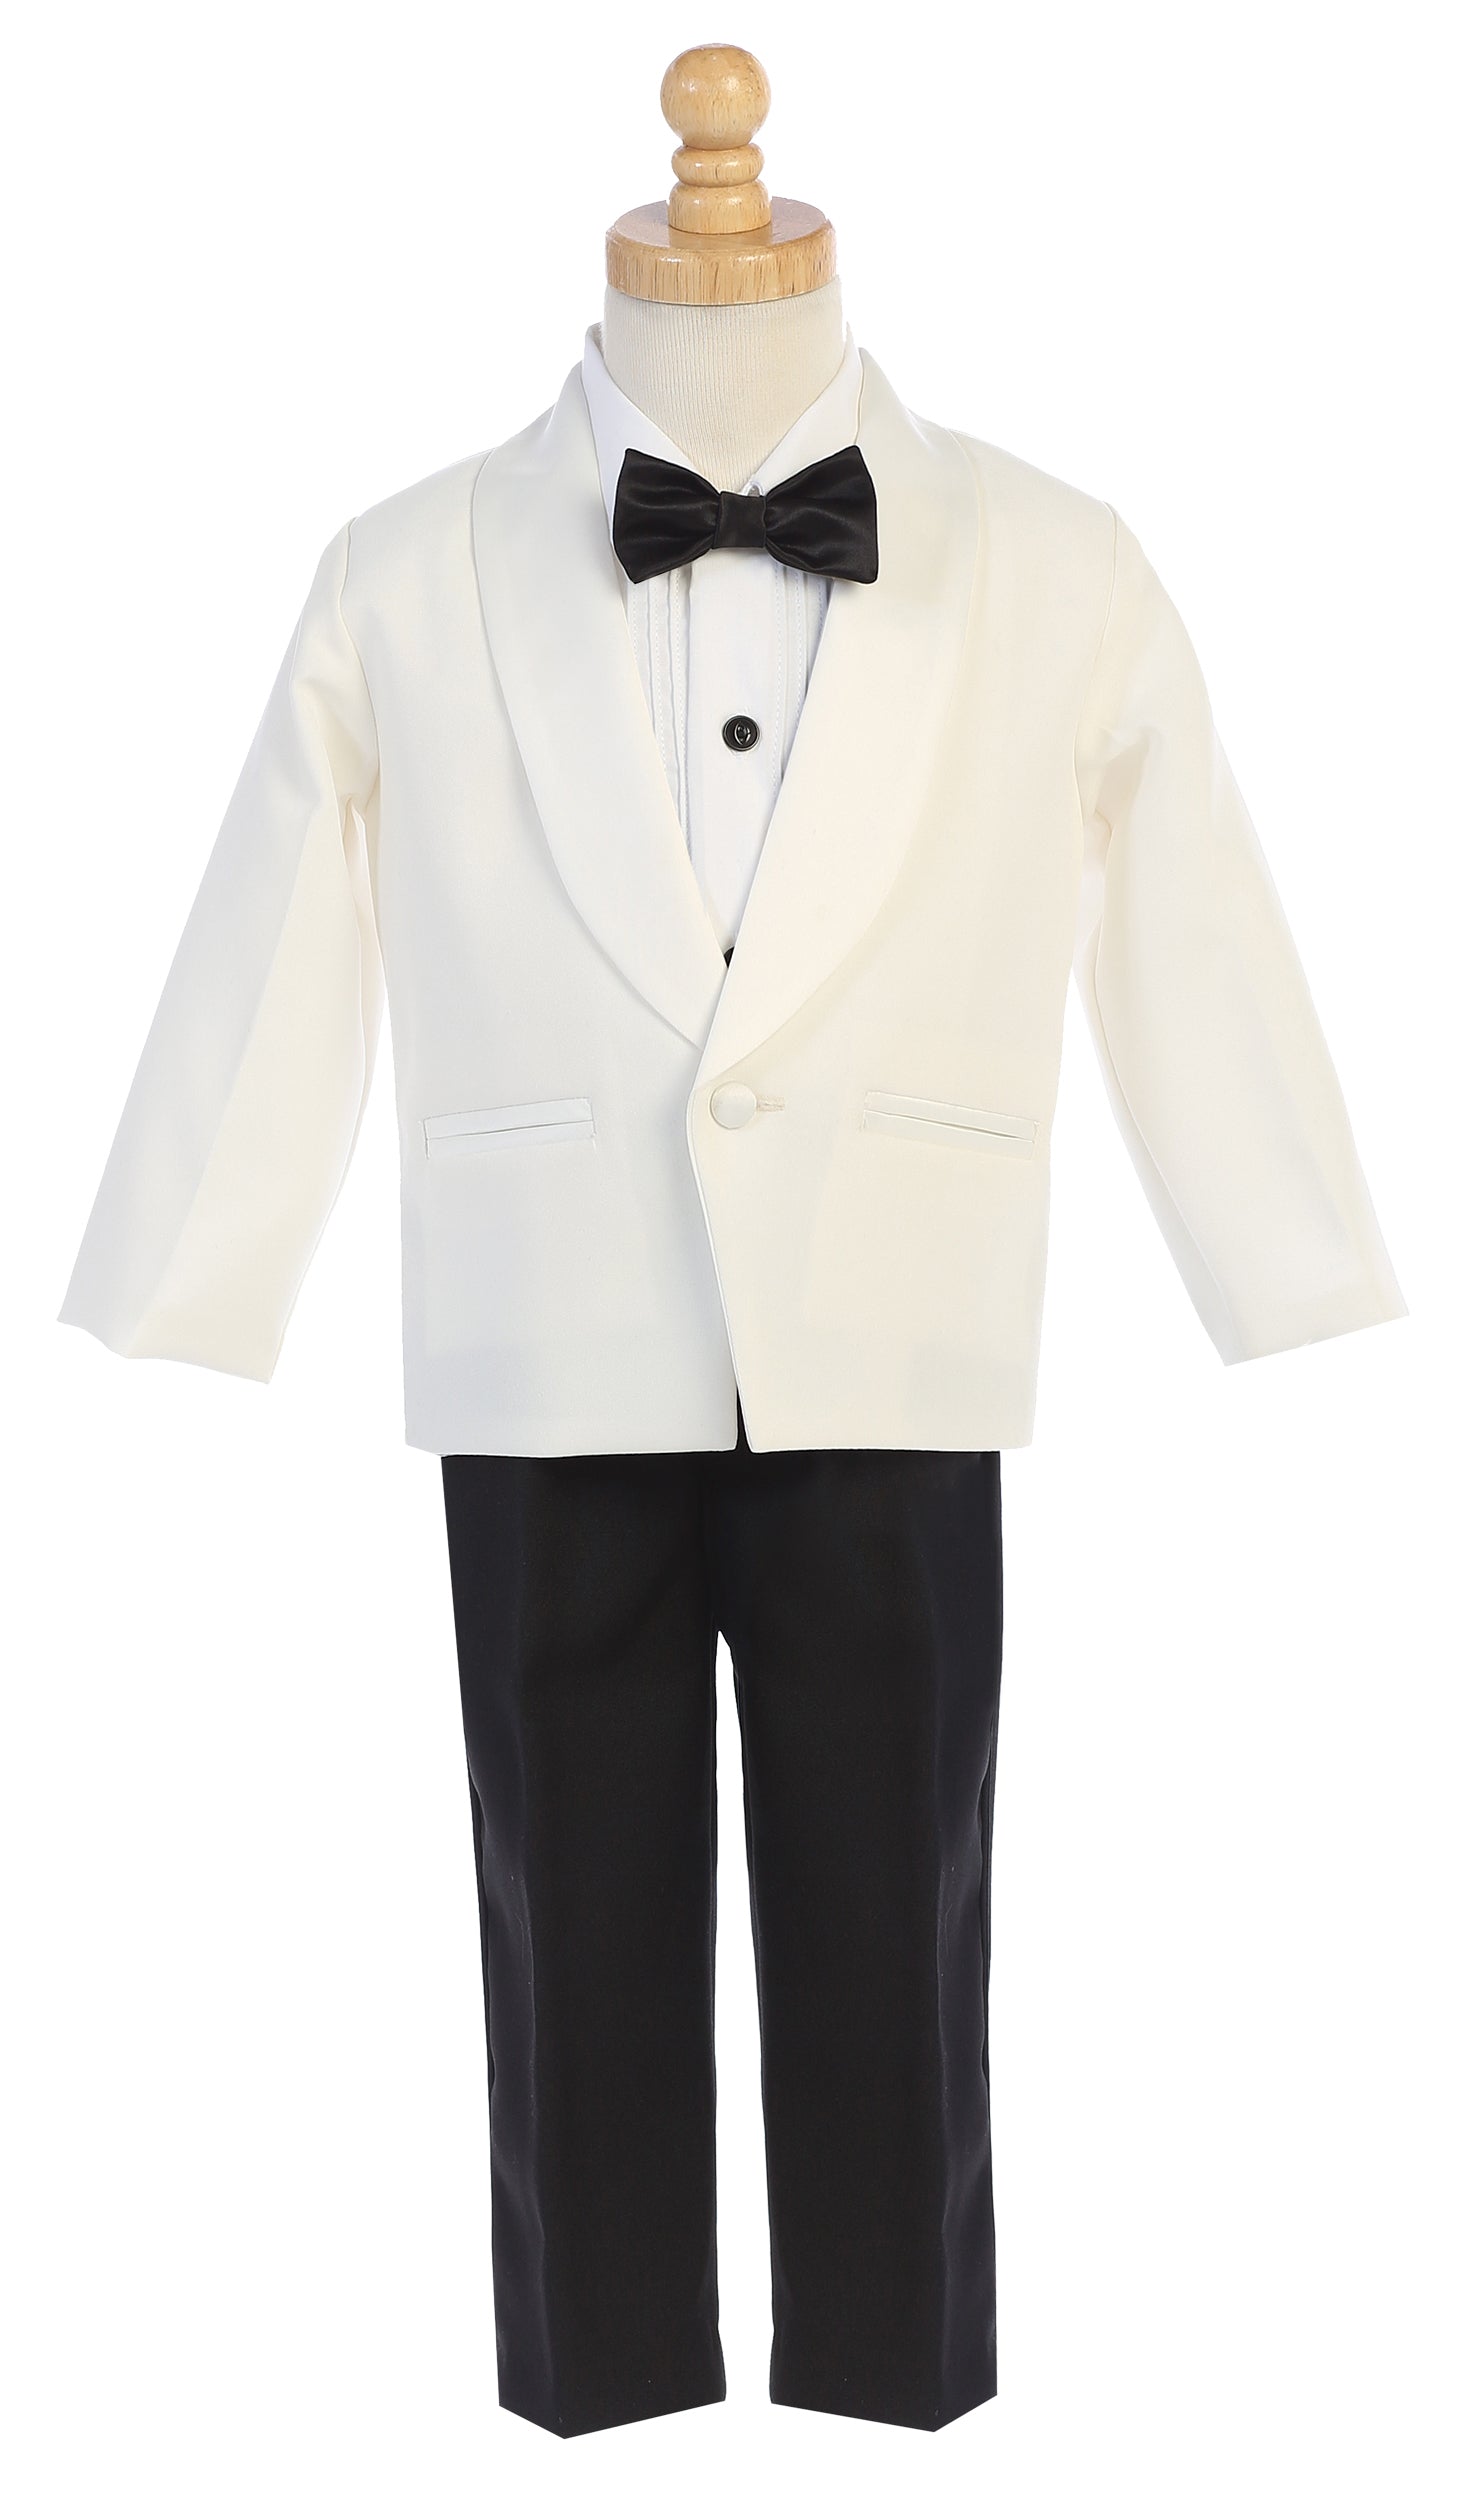 Ivory shawl tuxedo 7580, where classic elegance meets modern flair.